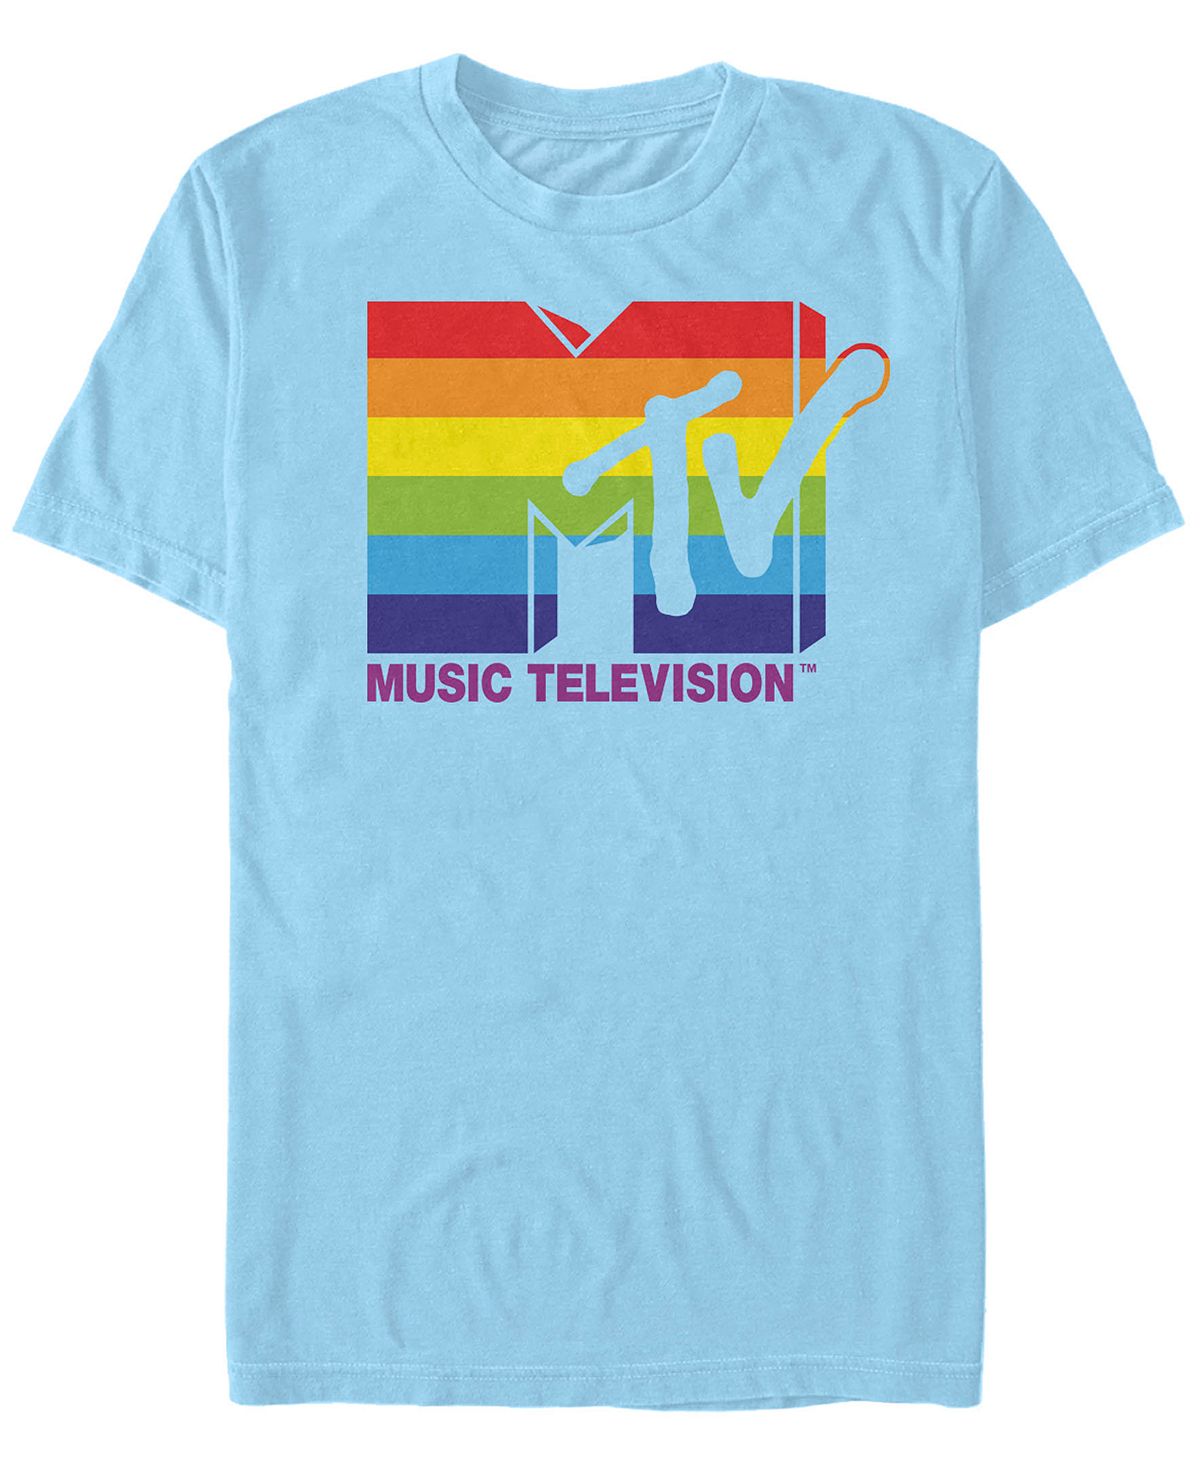 Мужская футболка с коротким рукавом с логотипом rainbow pride Fifth Sun, голубой пульт для телевизора mystery mtv 4217lw